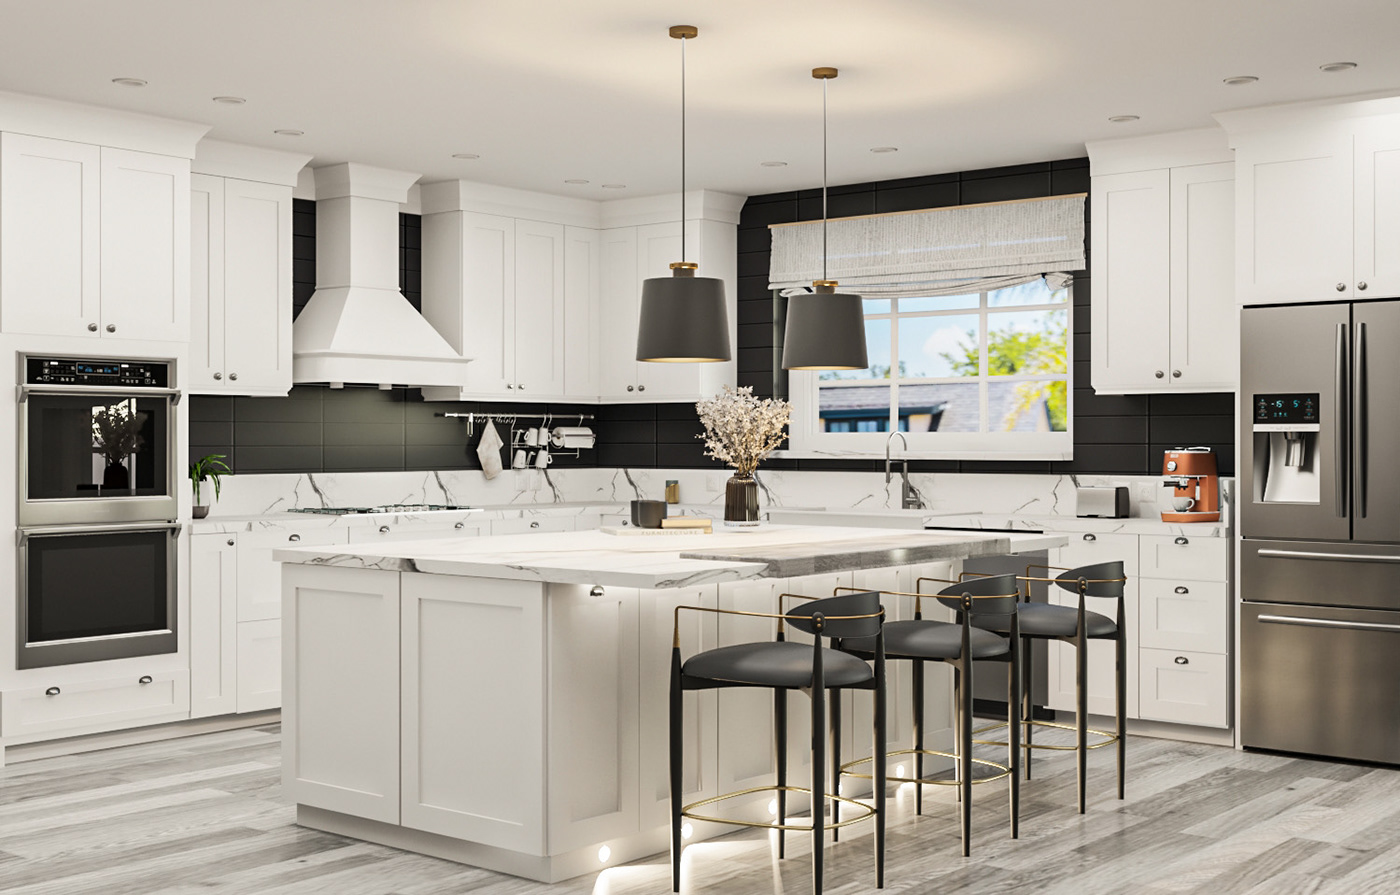 white kitchen kitchen kitchen design Render visualization vray white kitchen cabinets cabinet Cabinets